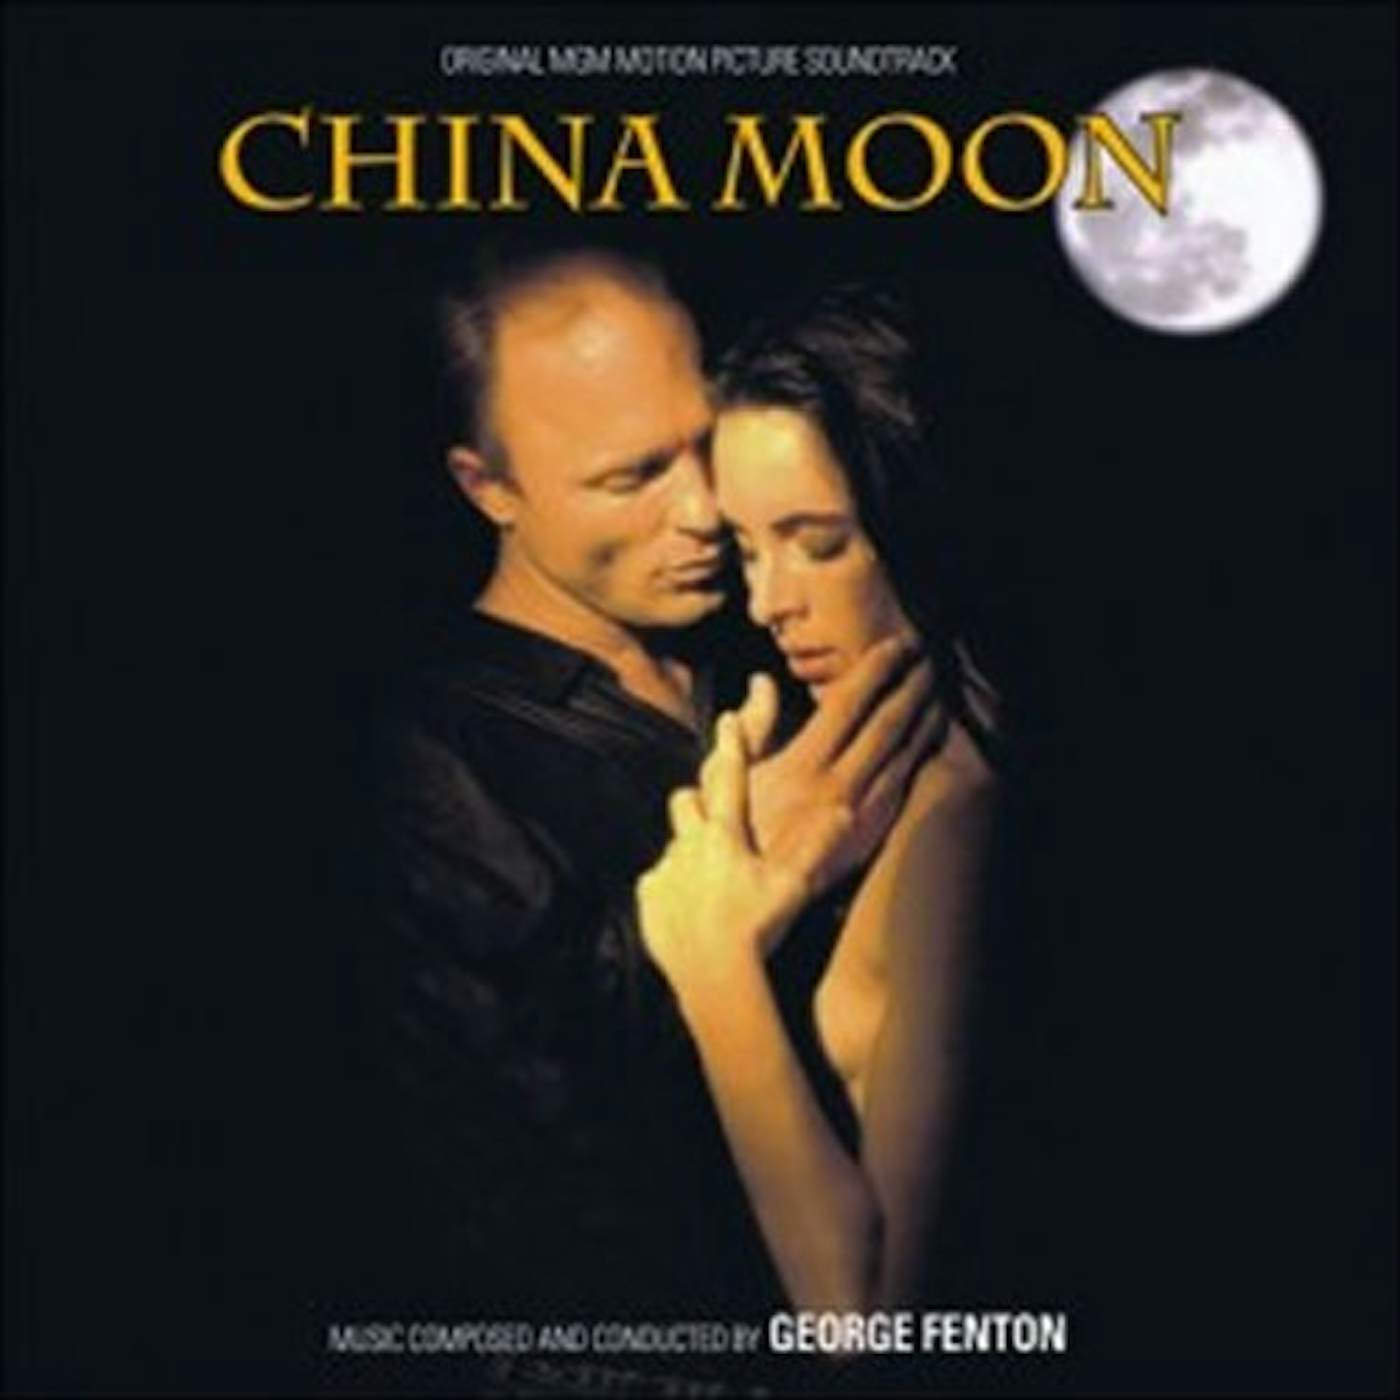 George Fenton CHINA MOON / Original Soundtrack CD